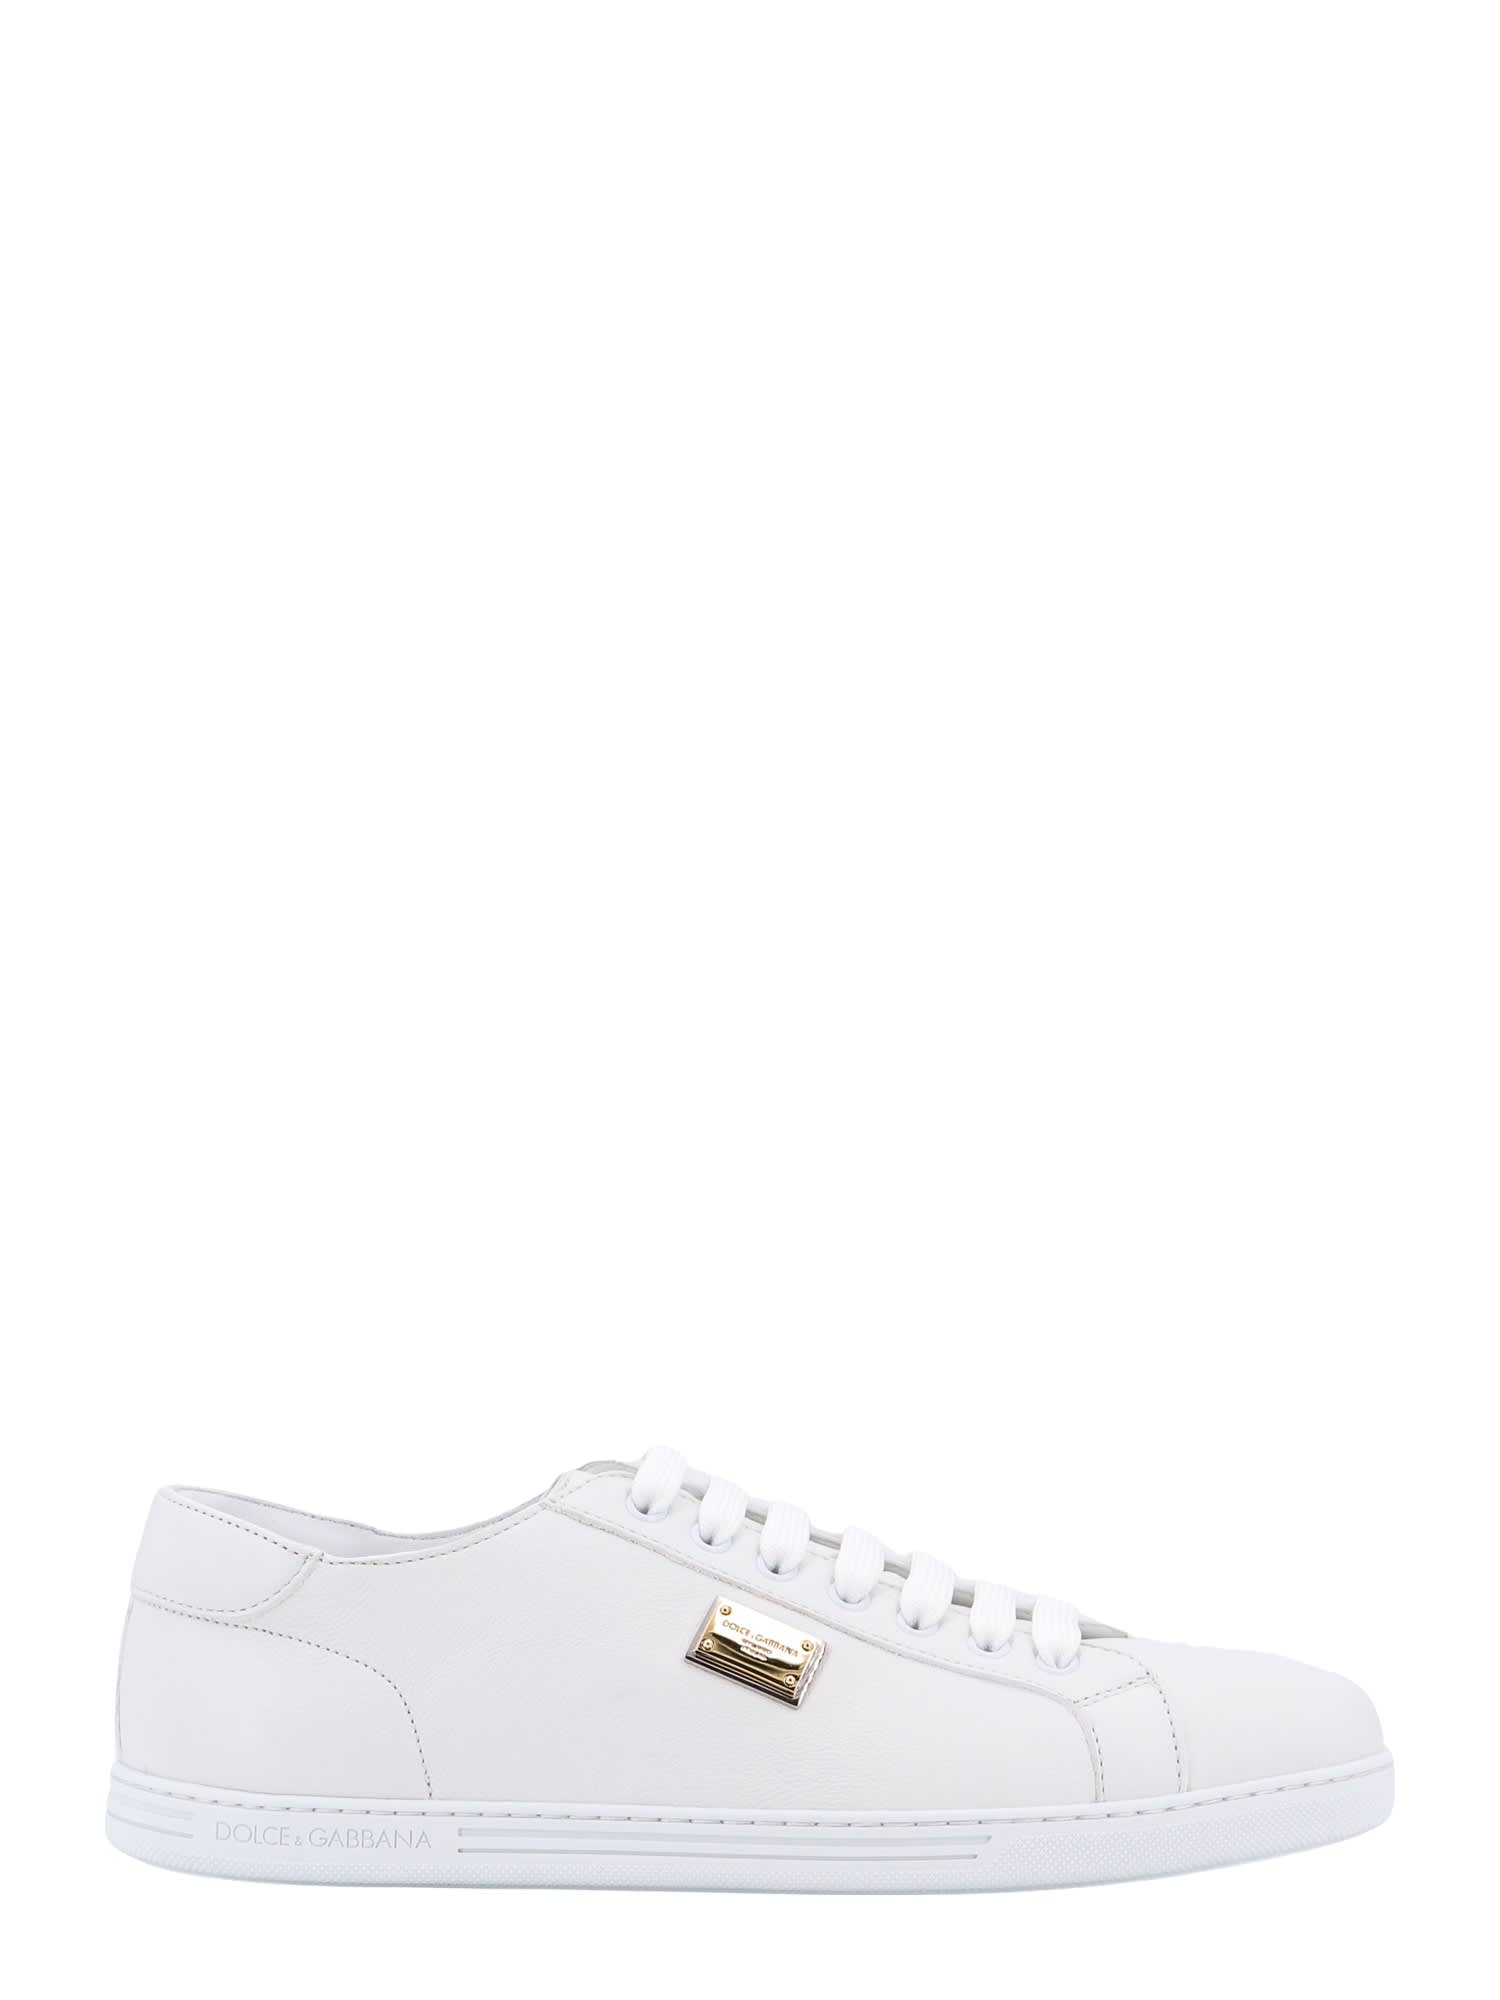 Dolce & Gabbana Saint Tropez Sneakers In White